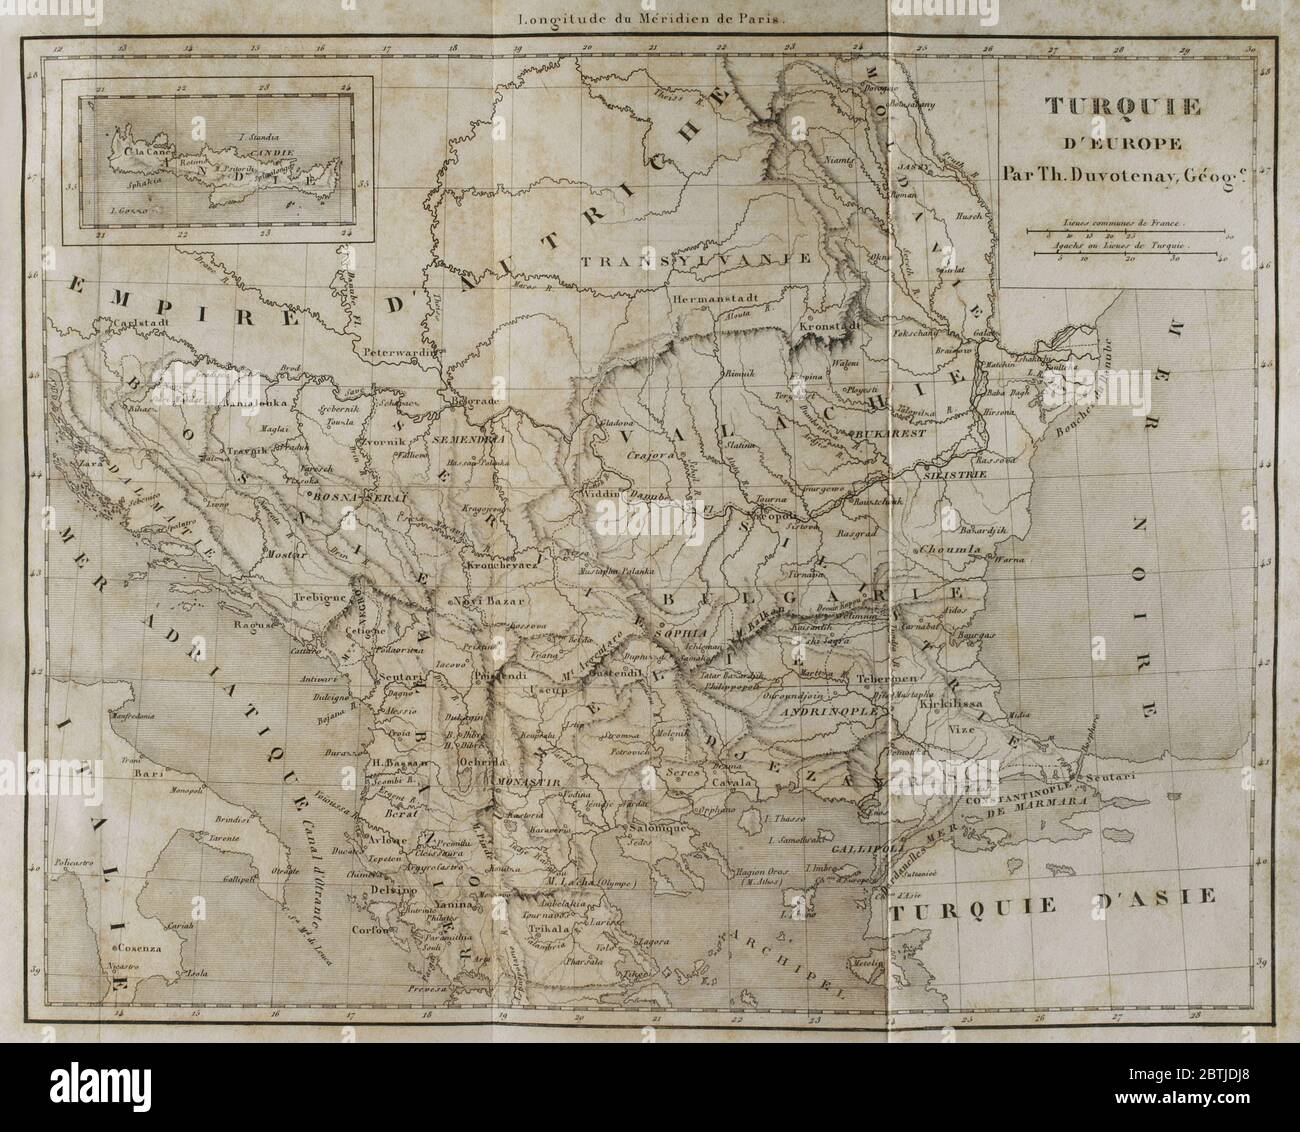 European Turkey map by Thunot Duvotenay. Historia de Turquia by Joseph Marie Jouannin (1783-1844) and Jules Van Gaver, 1840. Stock Photo